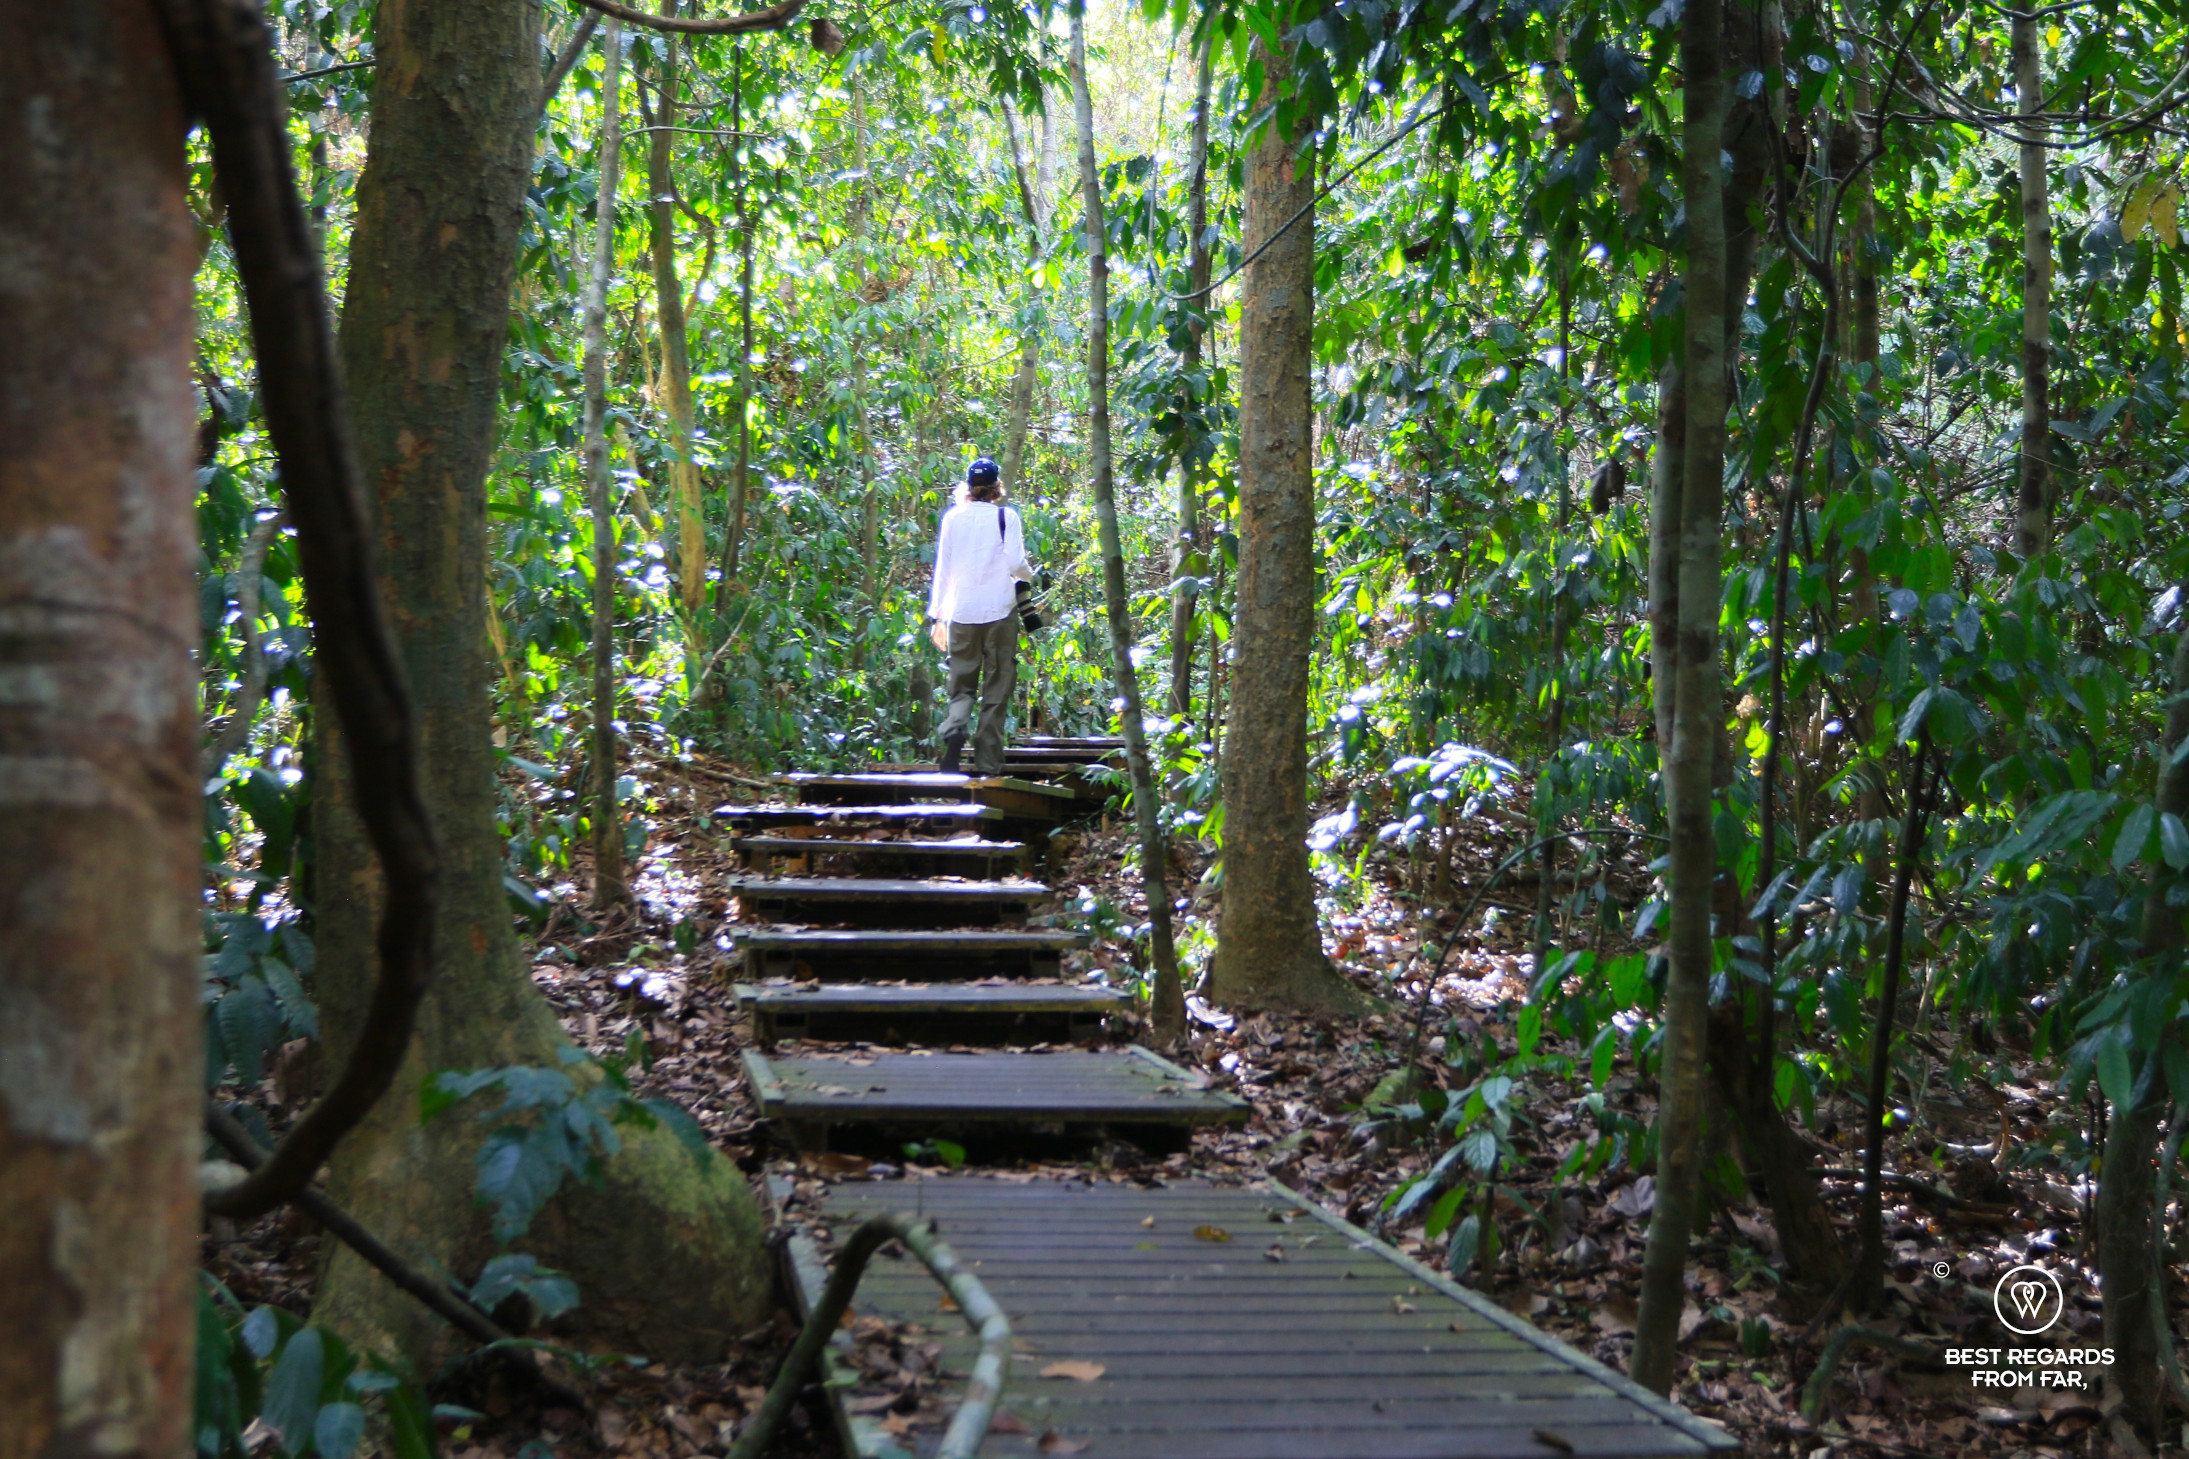 Visitor of the Taman Negara NP walking on the boardwalk through the rainforest.